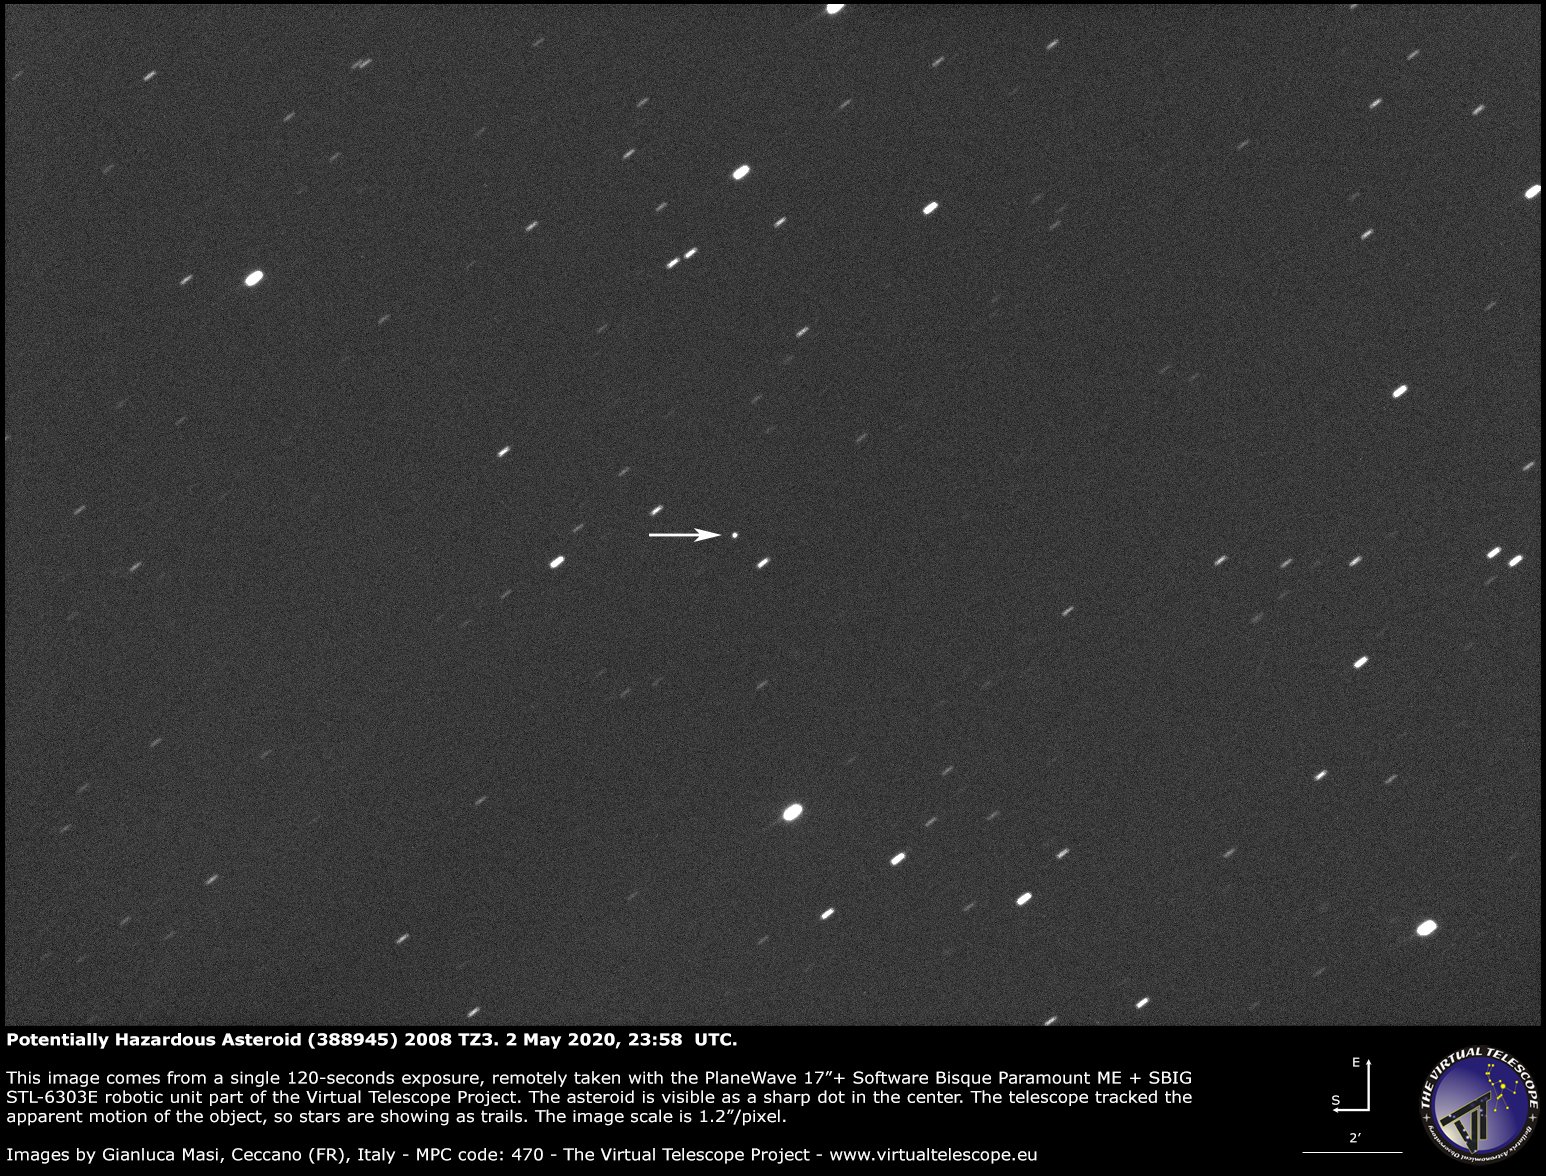 Potentially Hazardous Asteroid (388945) 2008 TZ3 - 2 May 2020.